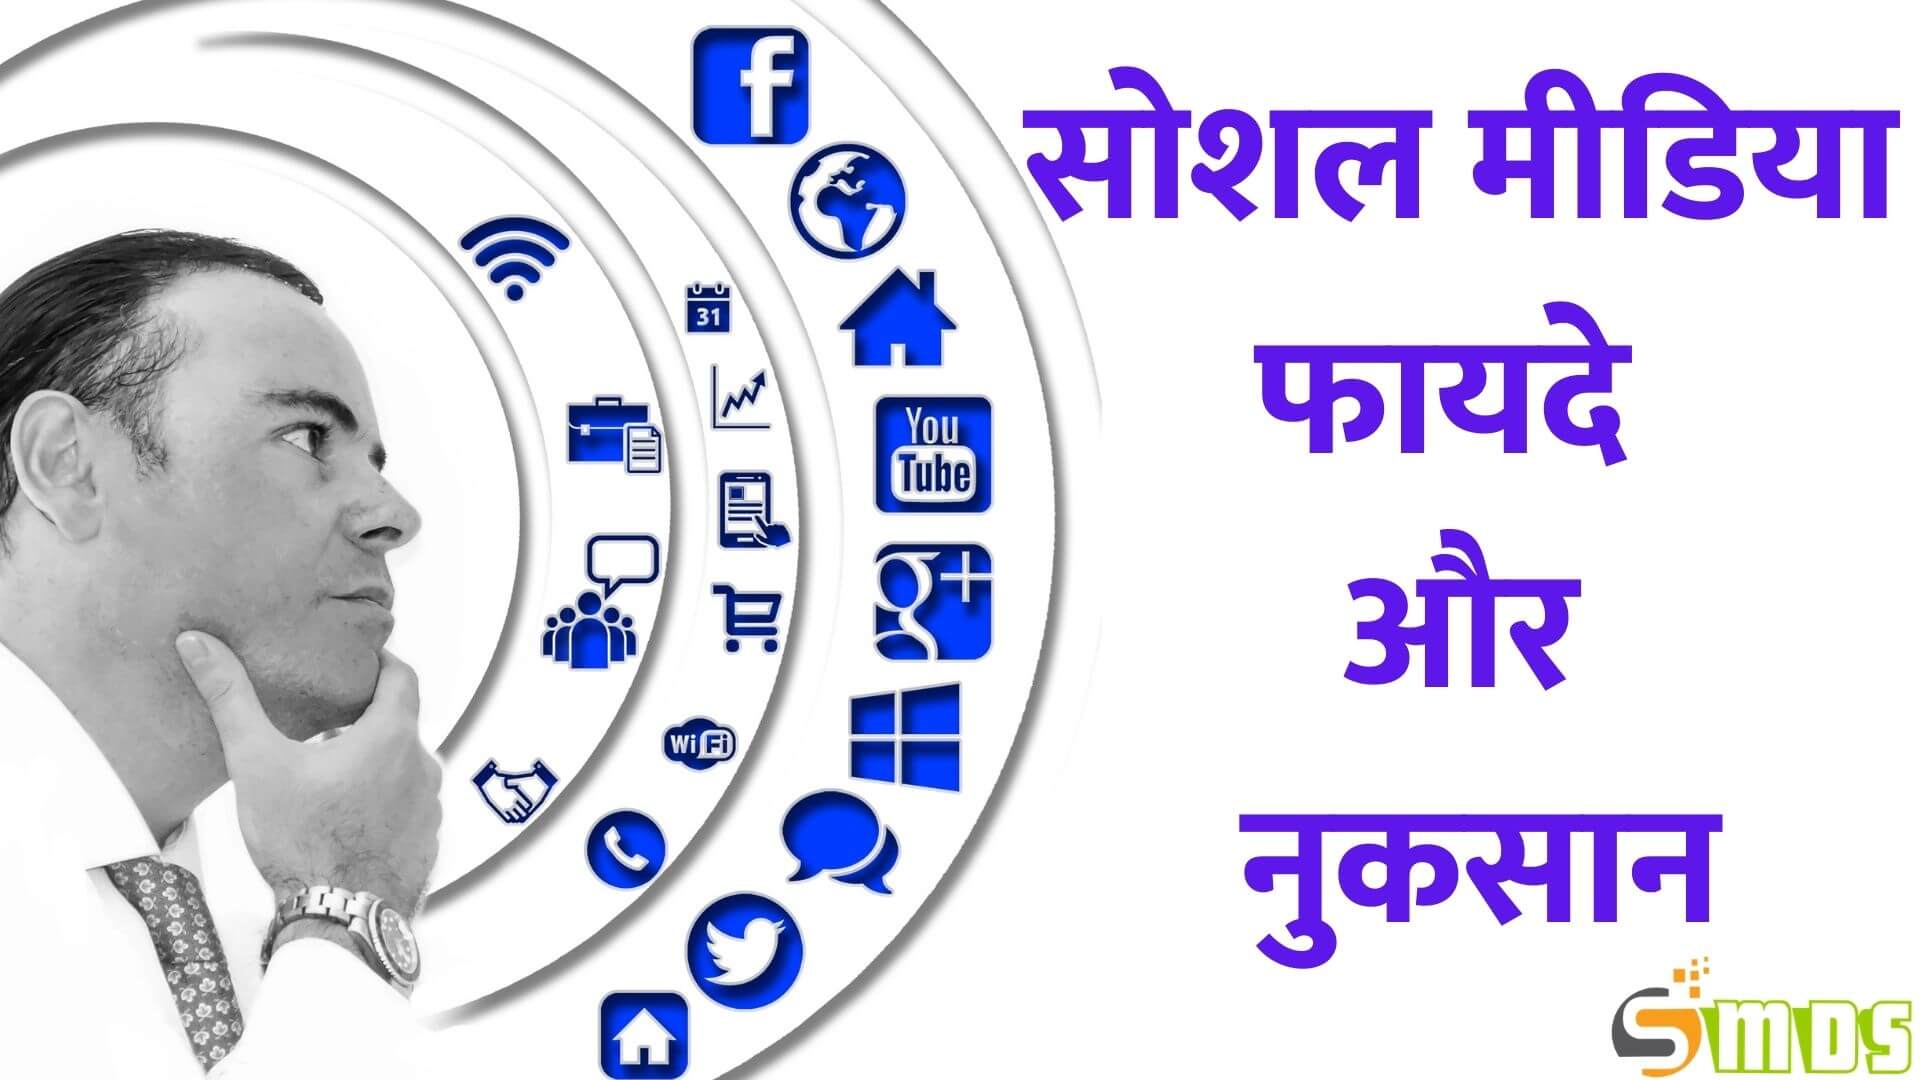 social media Ke labh, सोशल मीडिया के फायदे, Benefits of social media in Hindi, सोशल मीडिया के नुकसान, disadvantages of social media in Hindi